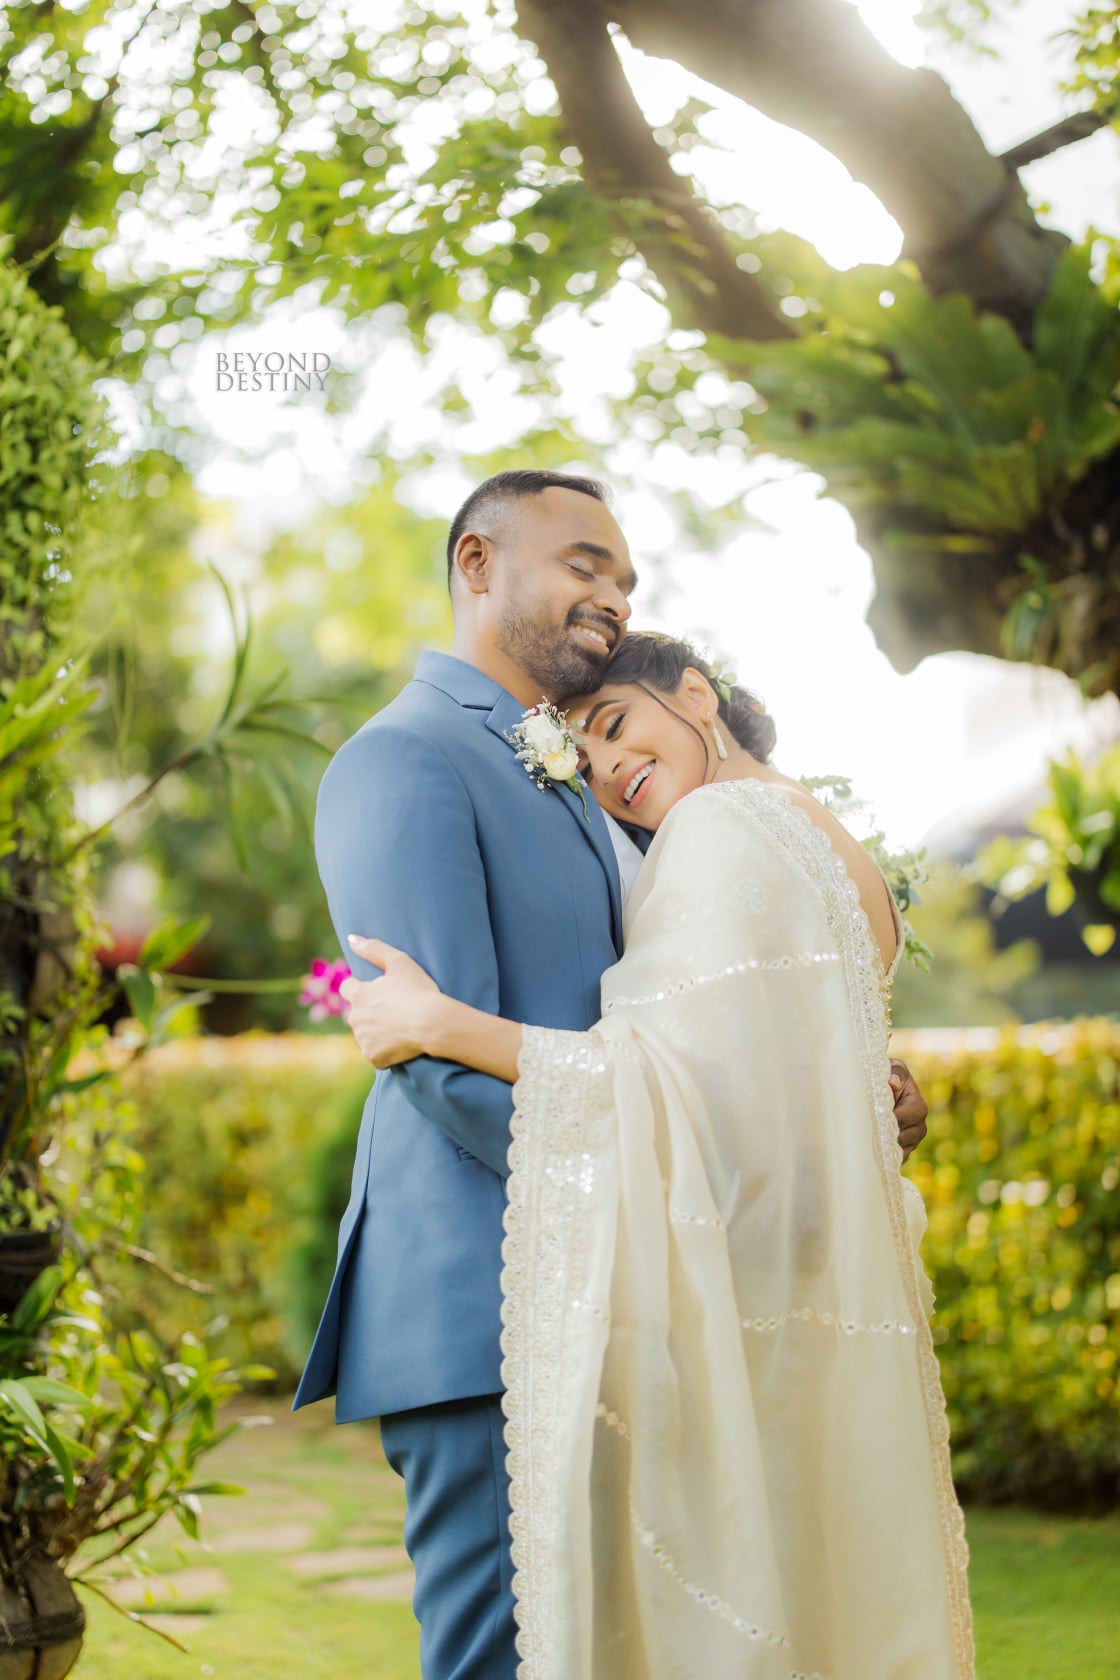 Sheshadrie & Krishan | Wedding Day